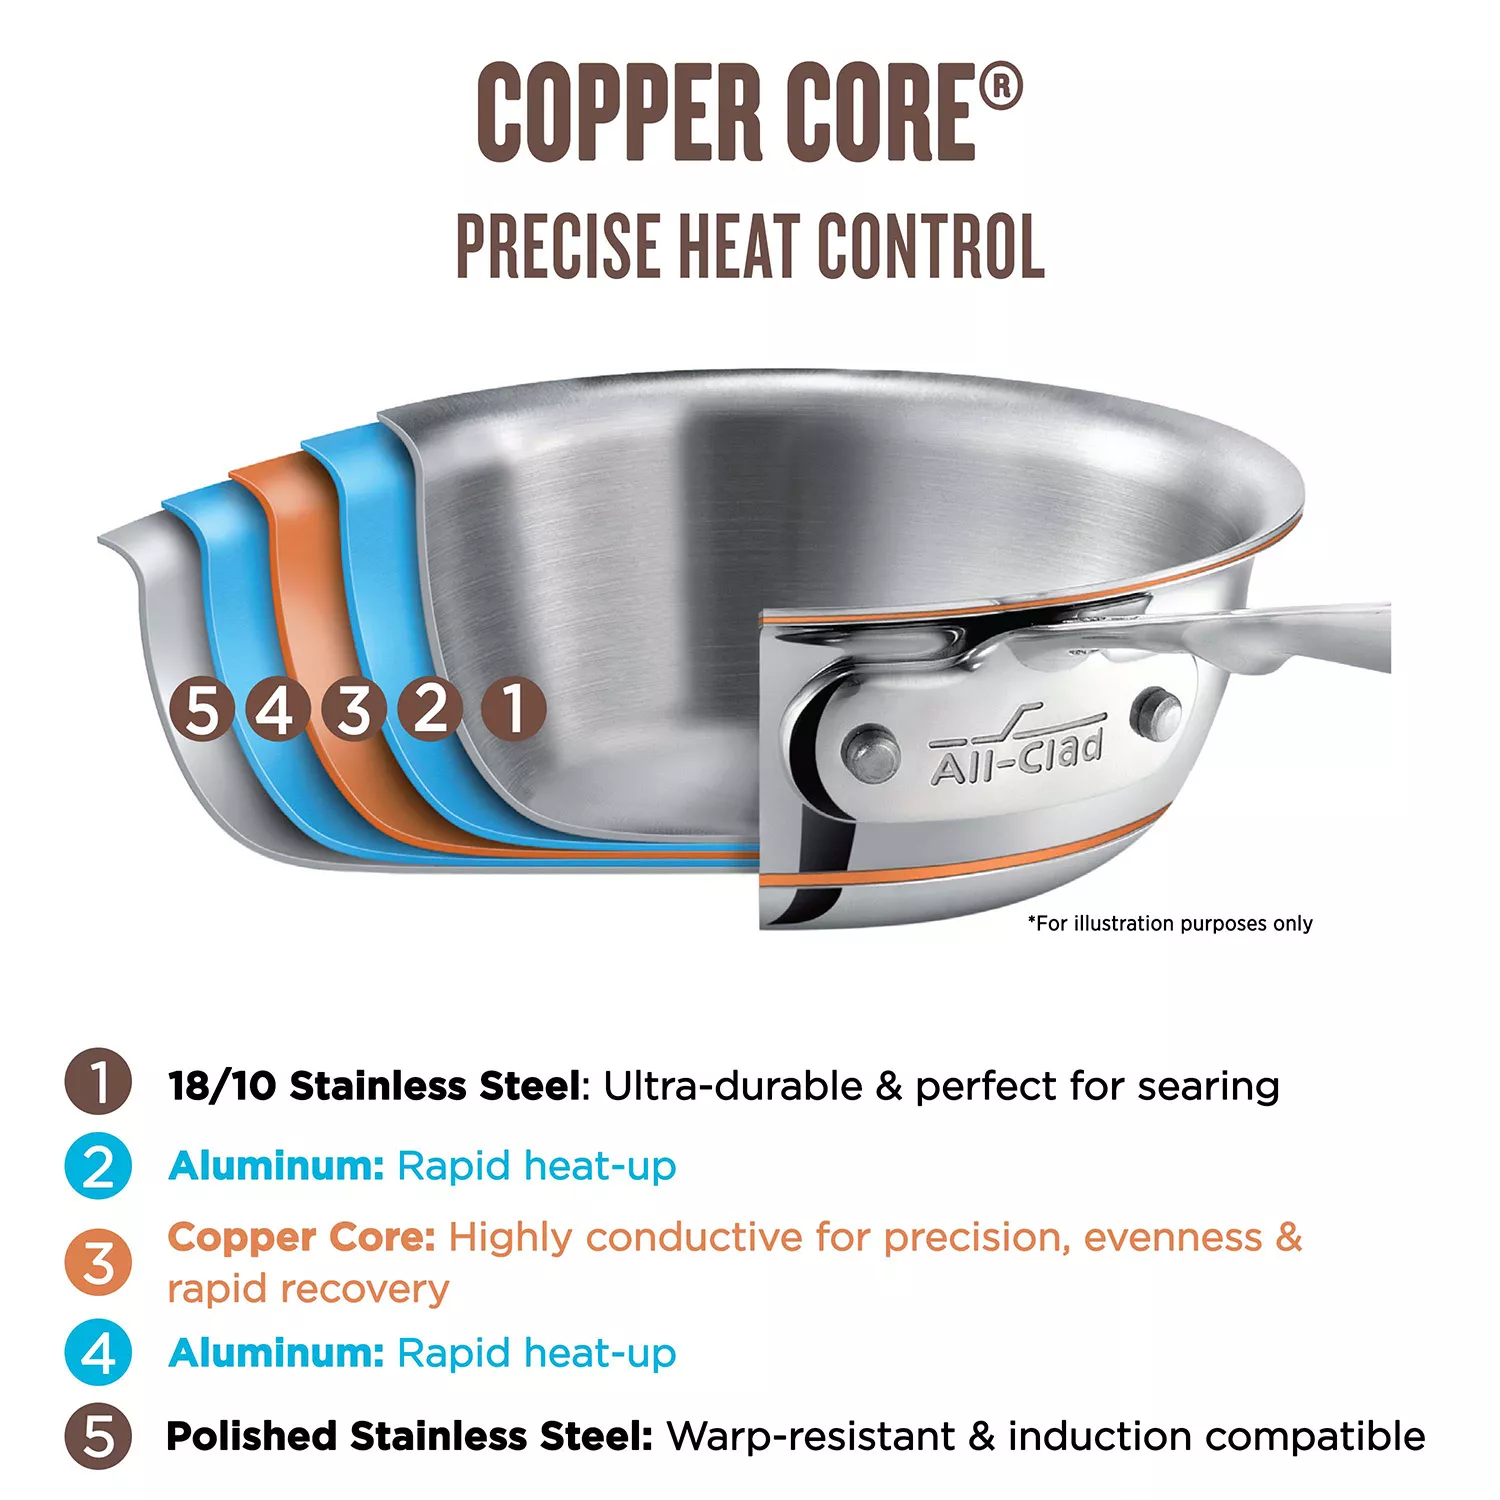 All-Clad Copper Core 7-Piece Set